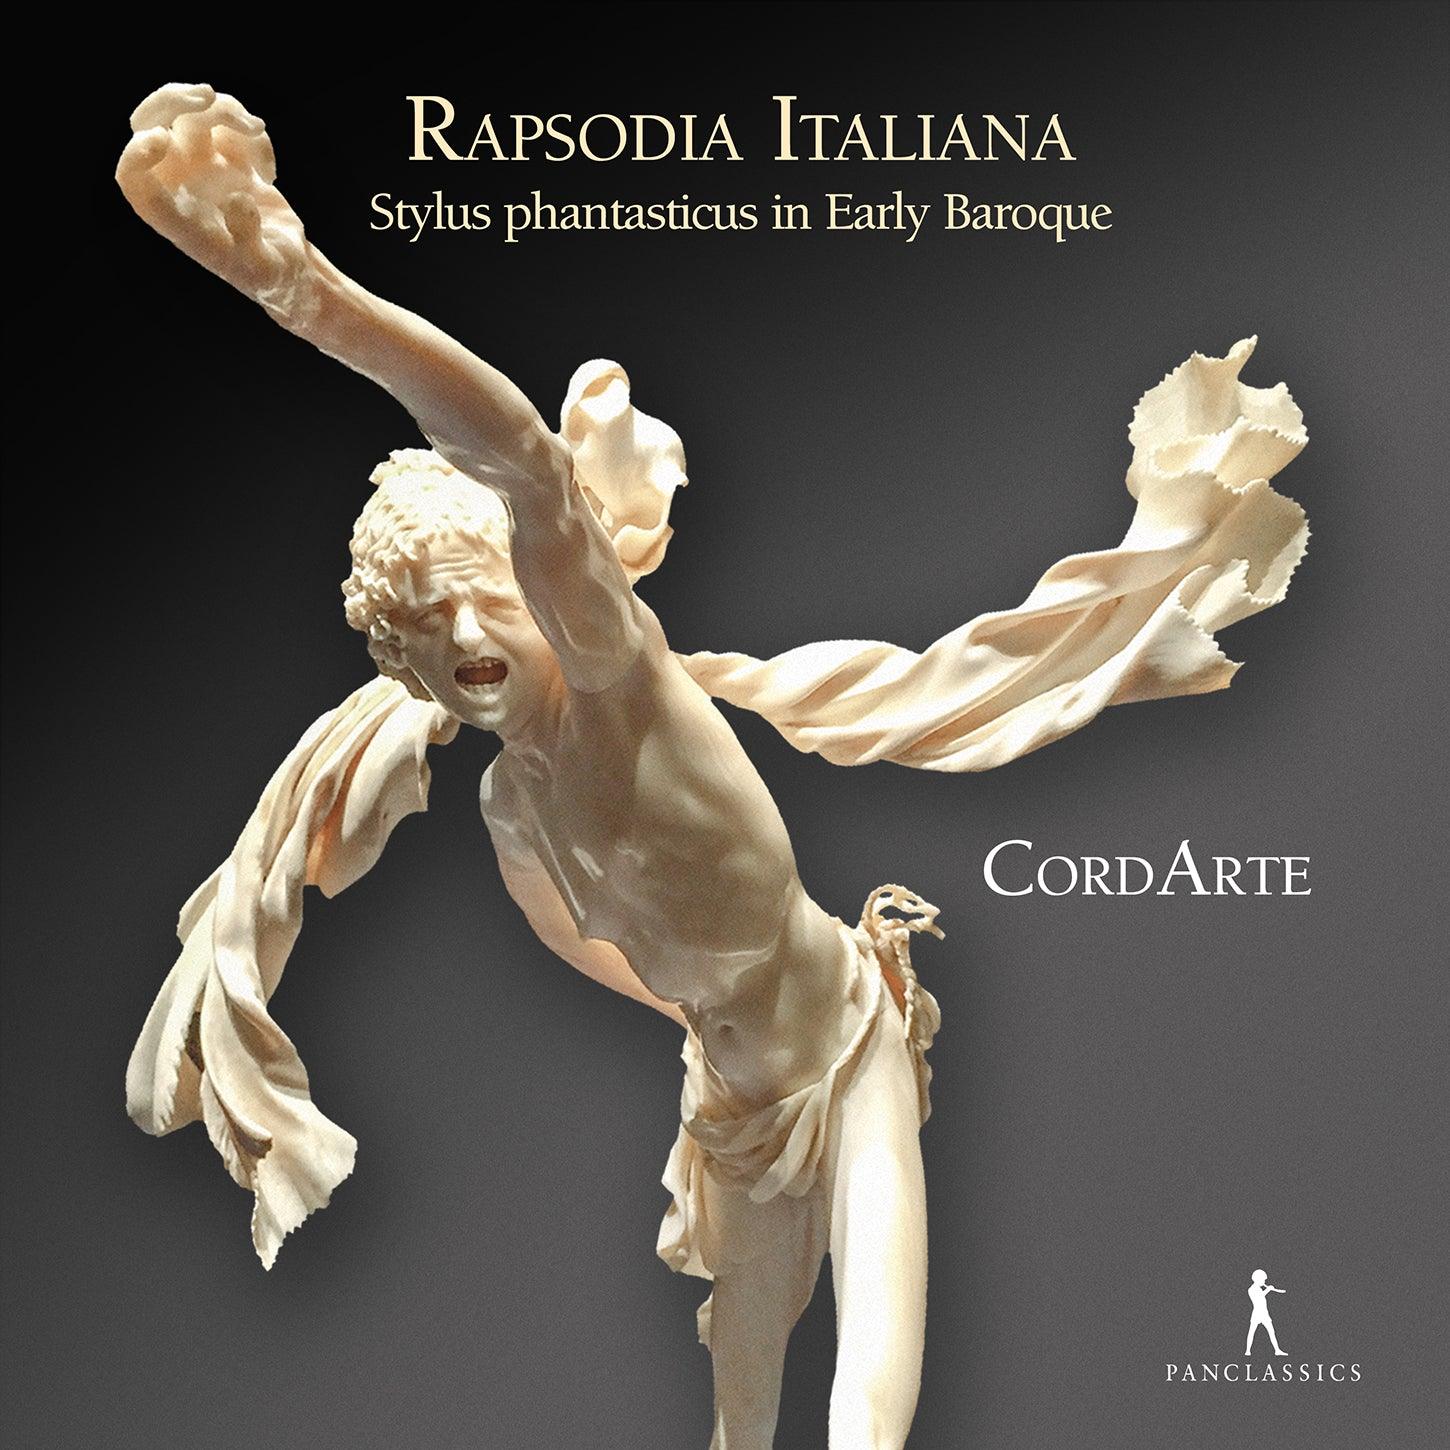 Castello, Frescobaldi, Stradella et al.: Rapsodia Italiana / CordArte Ensemble - ArkivMusic